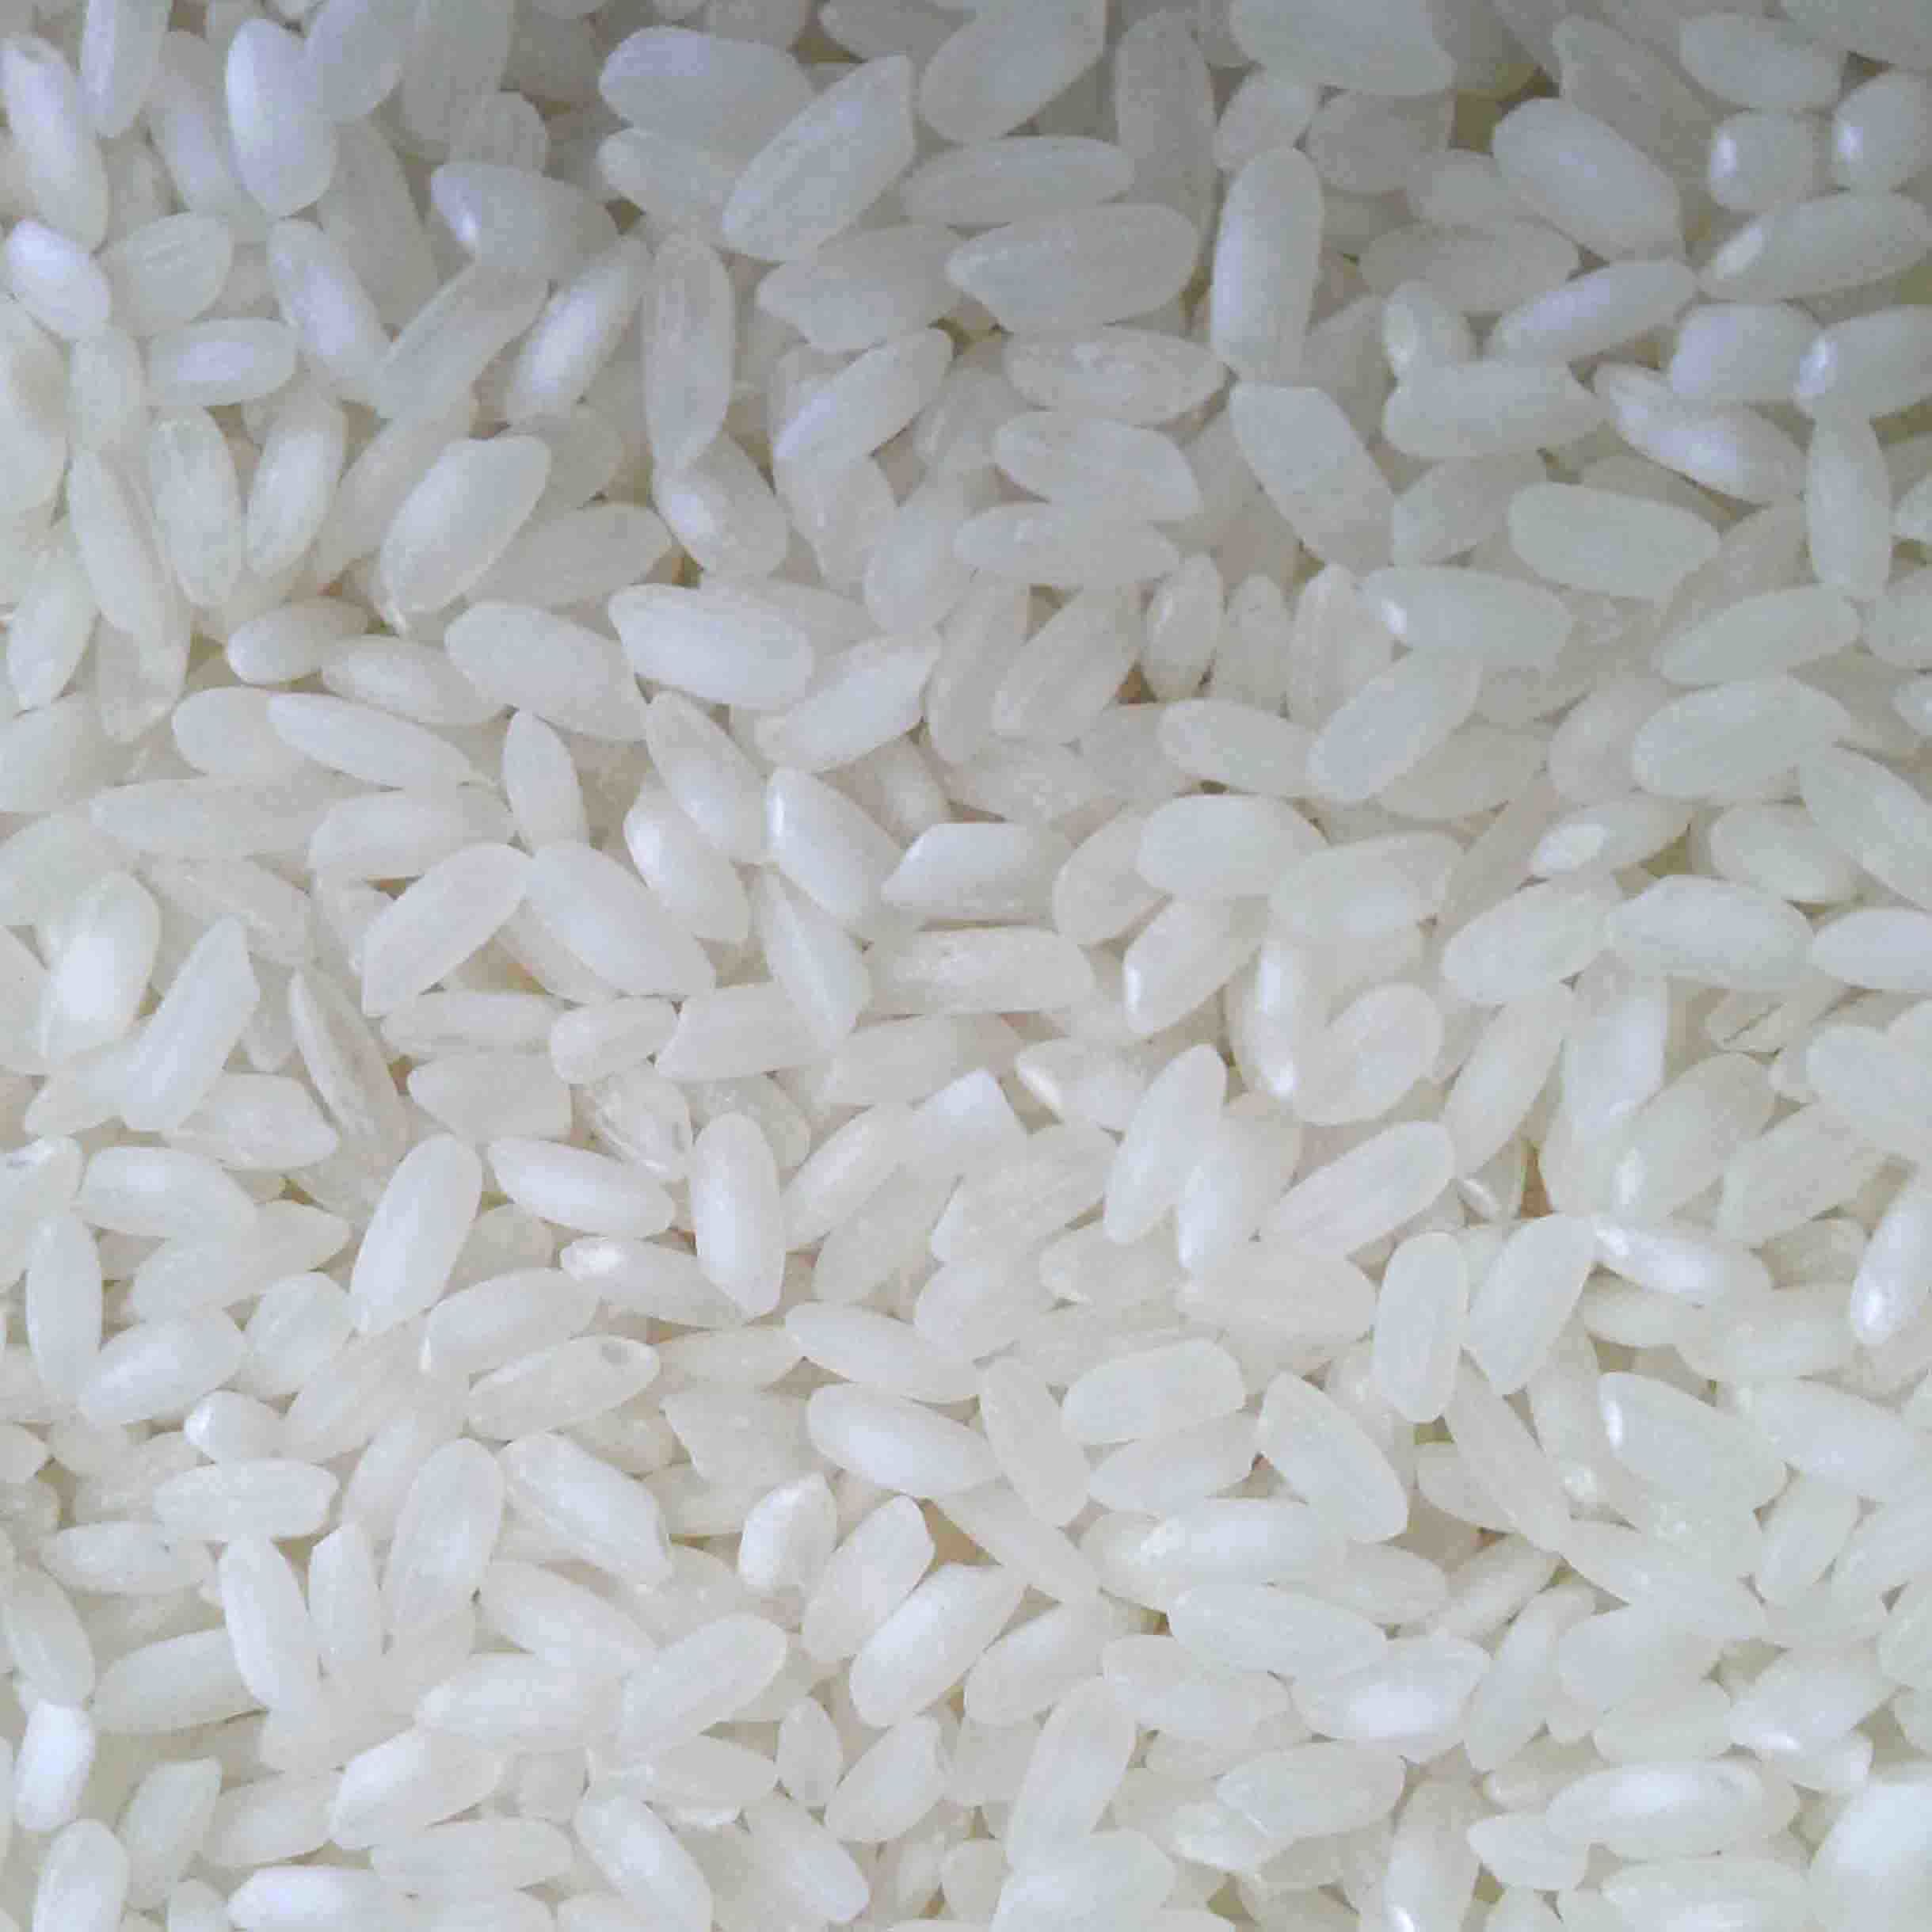 Vietnam Medium Rice